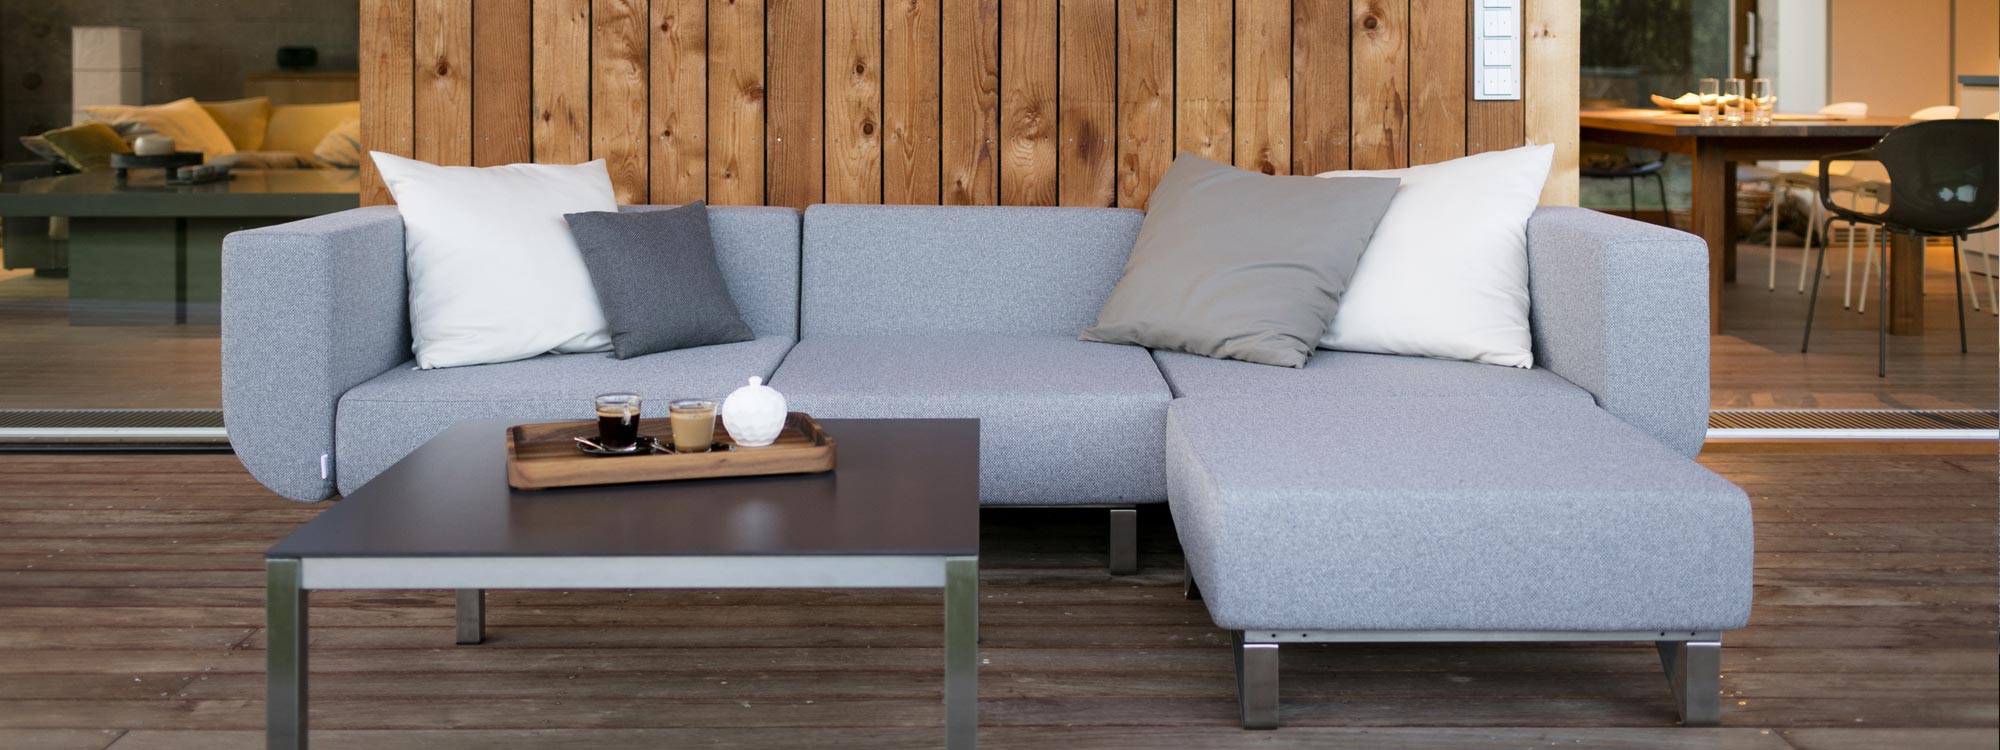 Image of Lotos luxury garden sofa on wooden decking